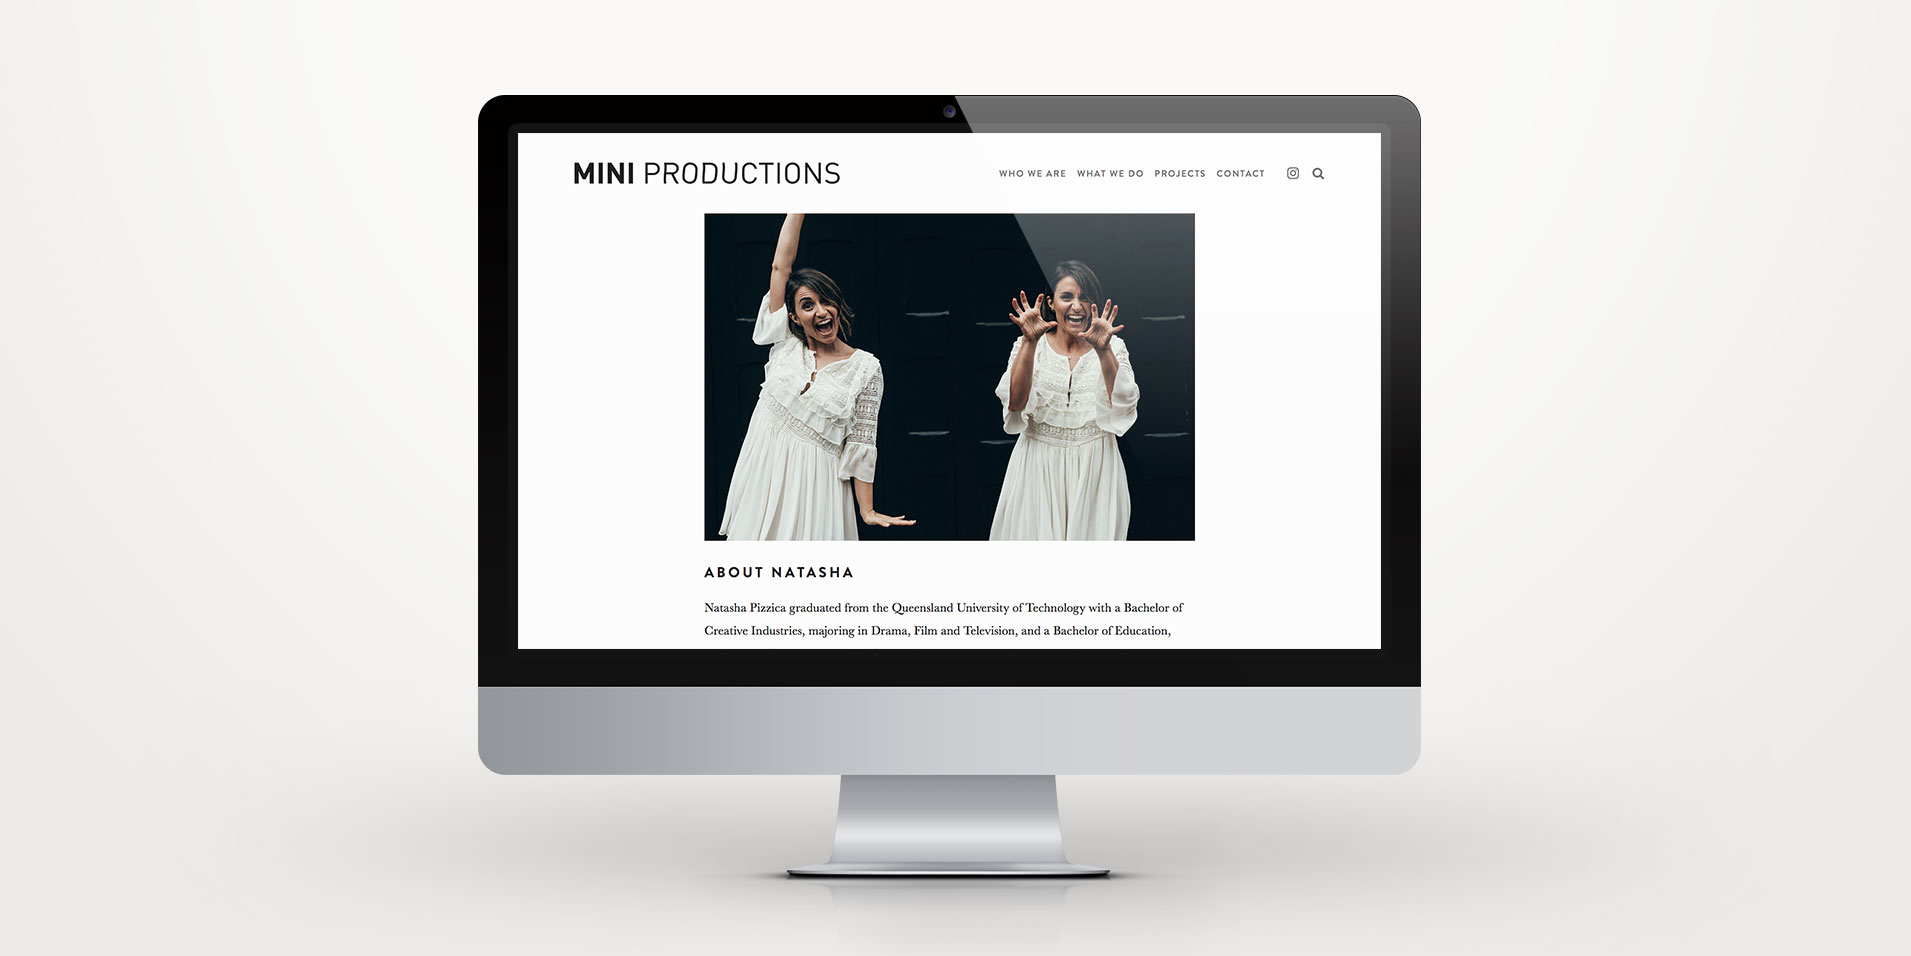 mini-productions-imac-presentation-3.jpg